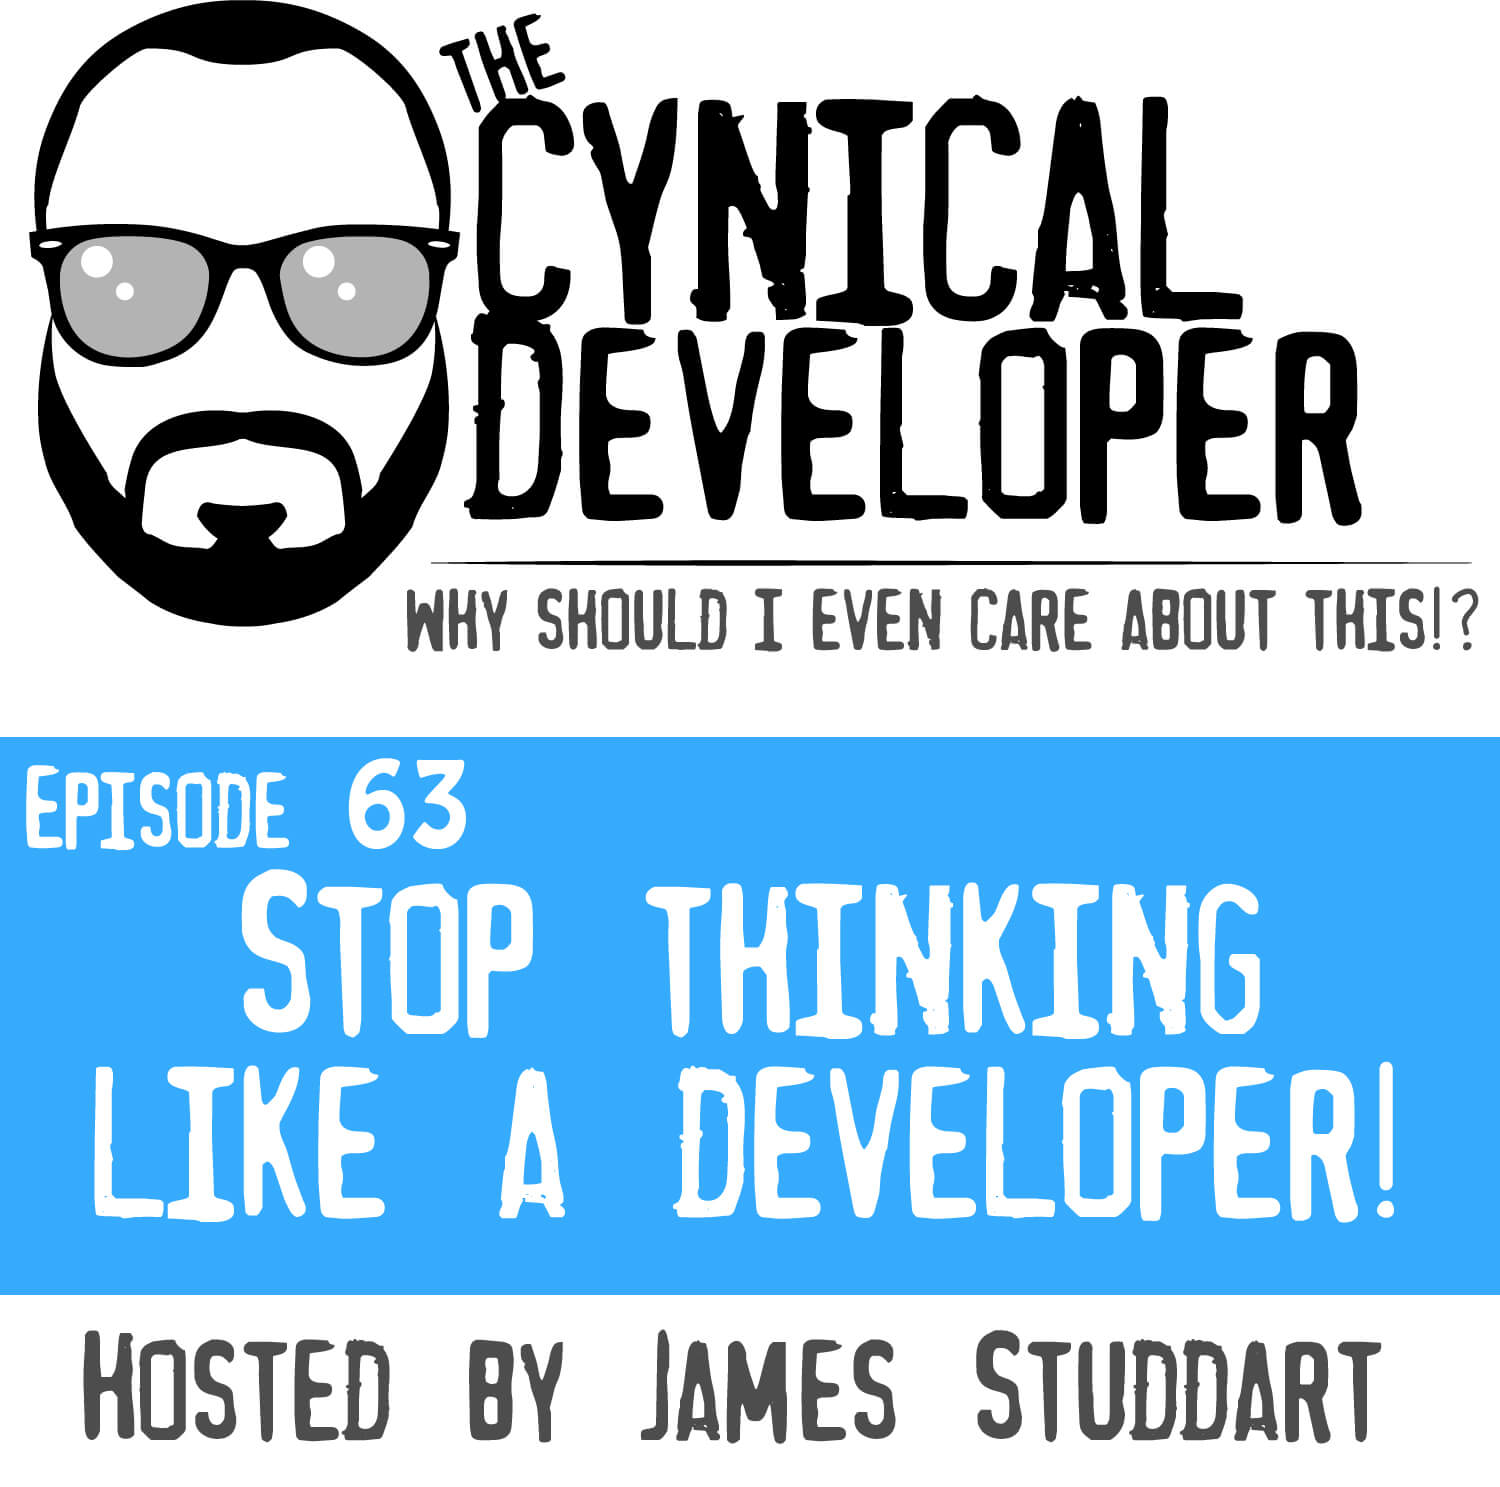 Episode 63 - Stop thinking like a developer